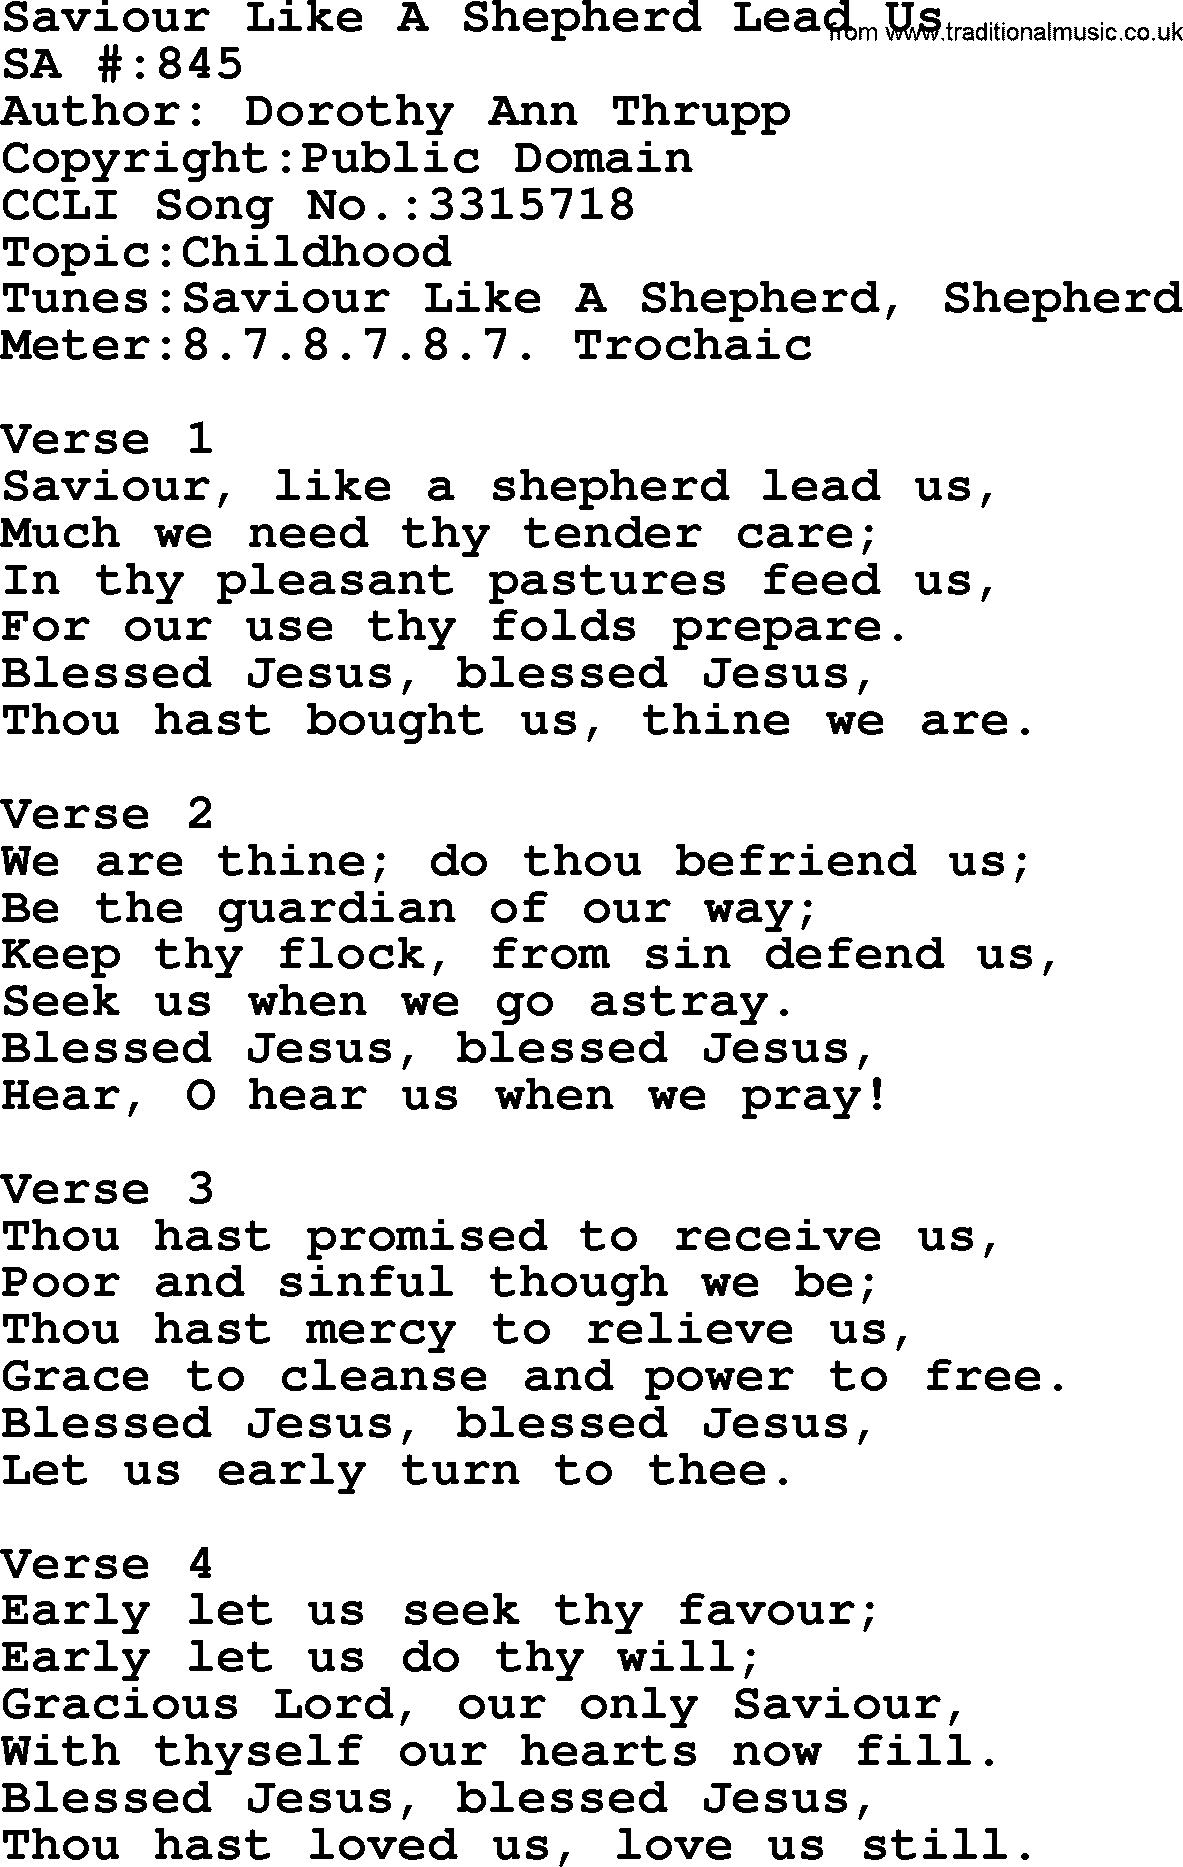 Salvation Army Hymnal, title: Saviour Like A Shepherd Lead Us, with lyrics and PDF,